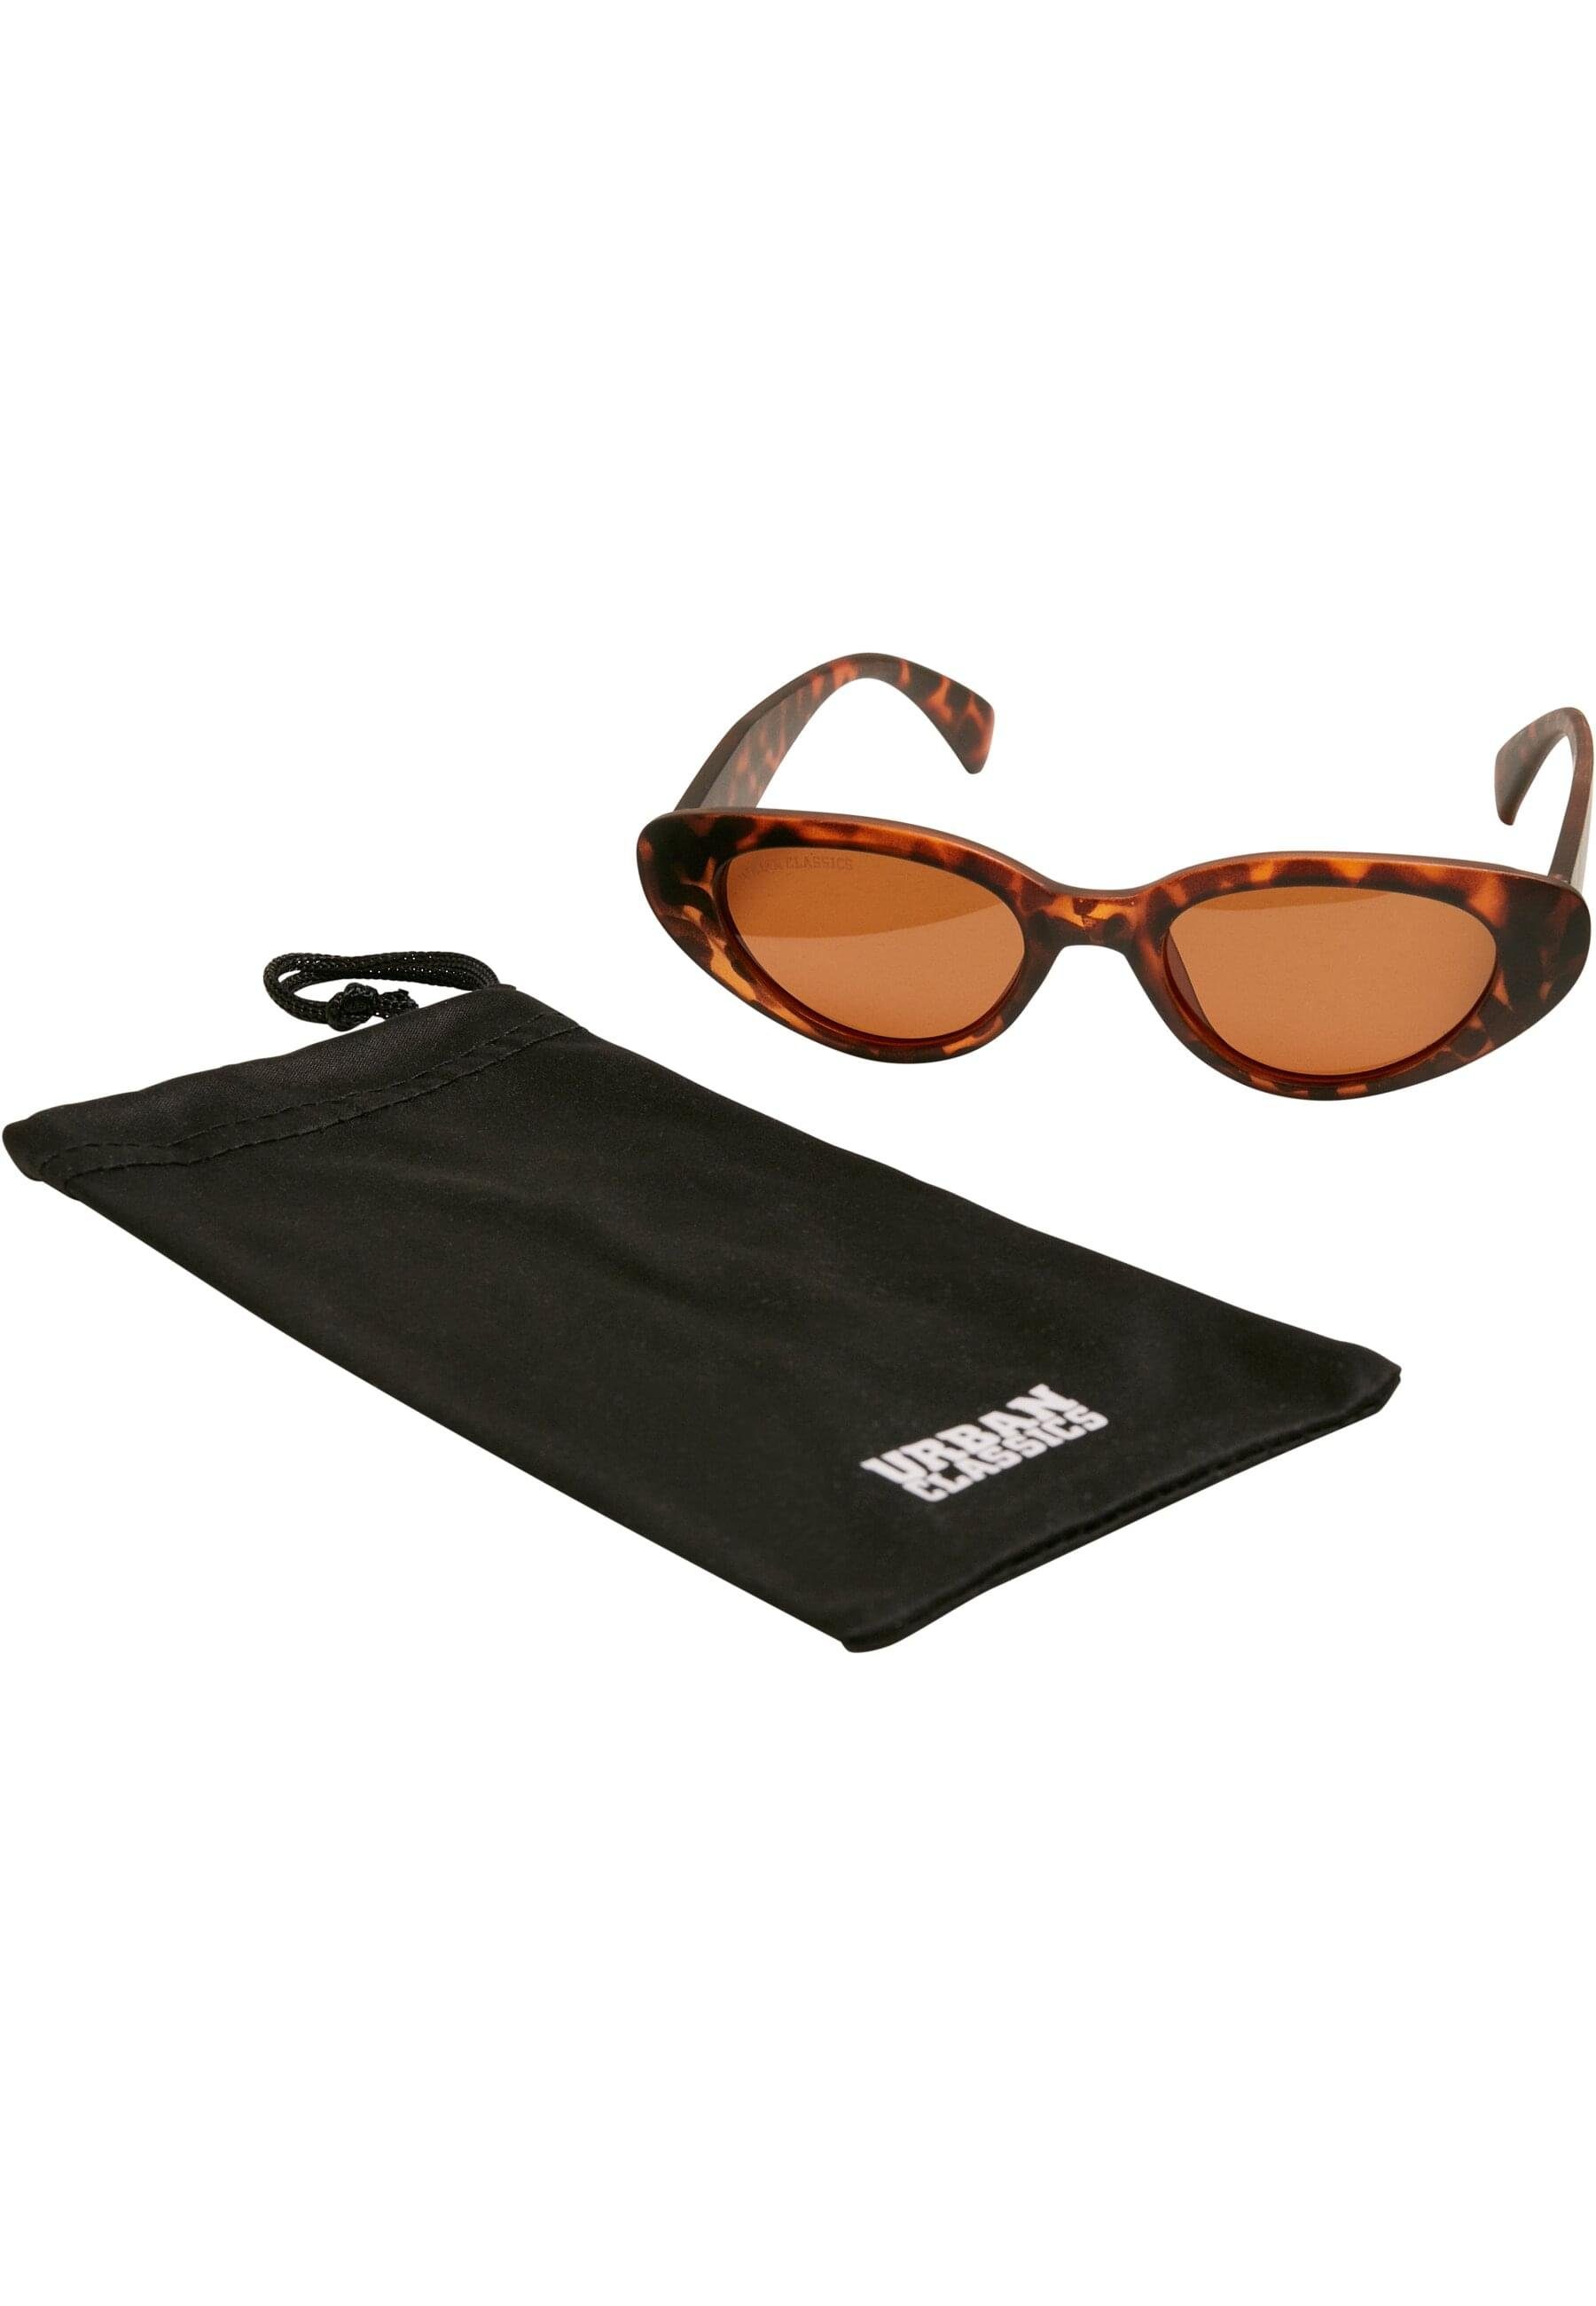 URBAN CLASSICS Sonnenbrille Unisex Sunglasses Puerto Rico With Chain brown